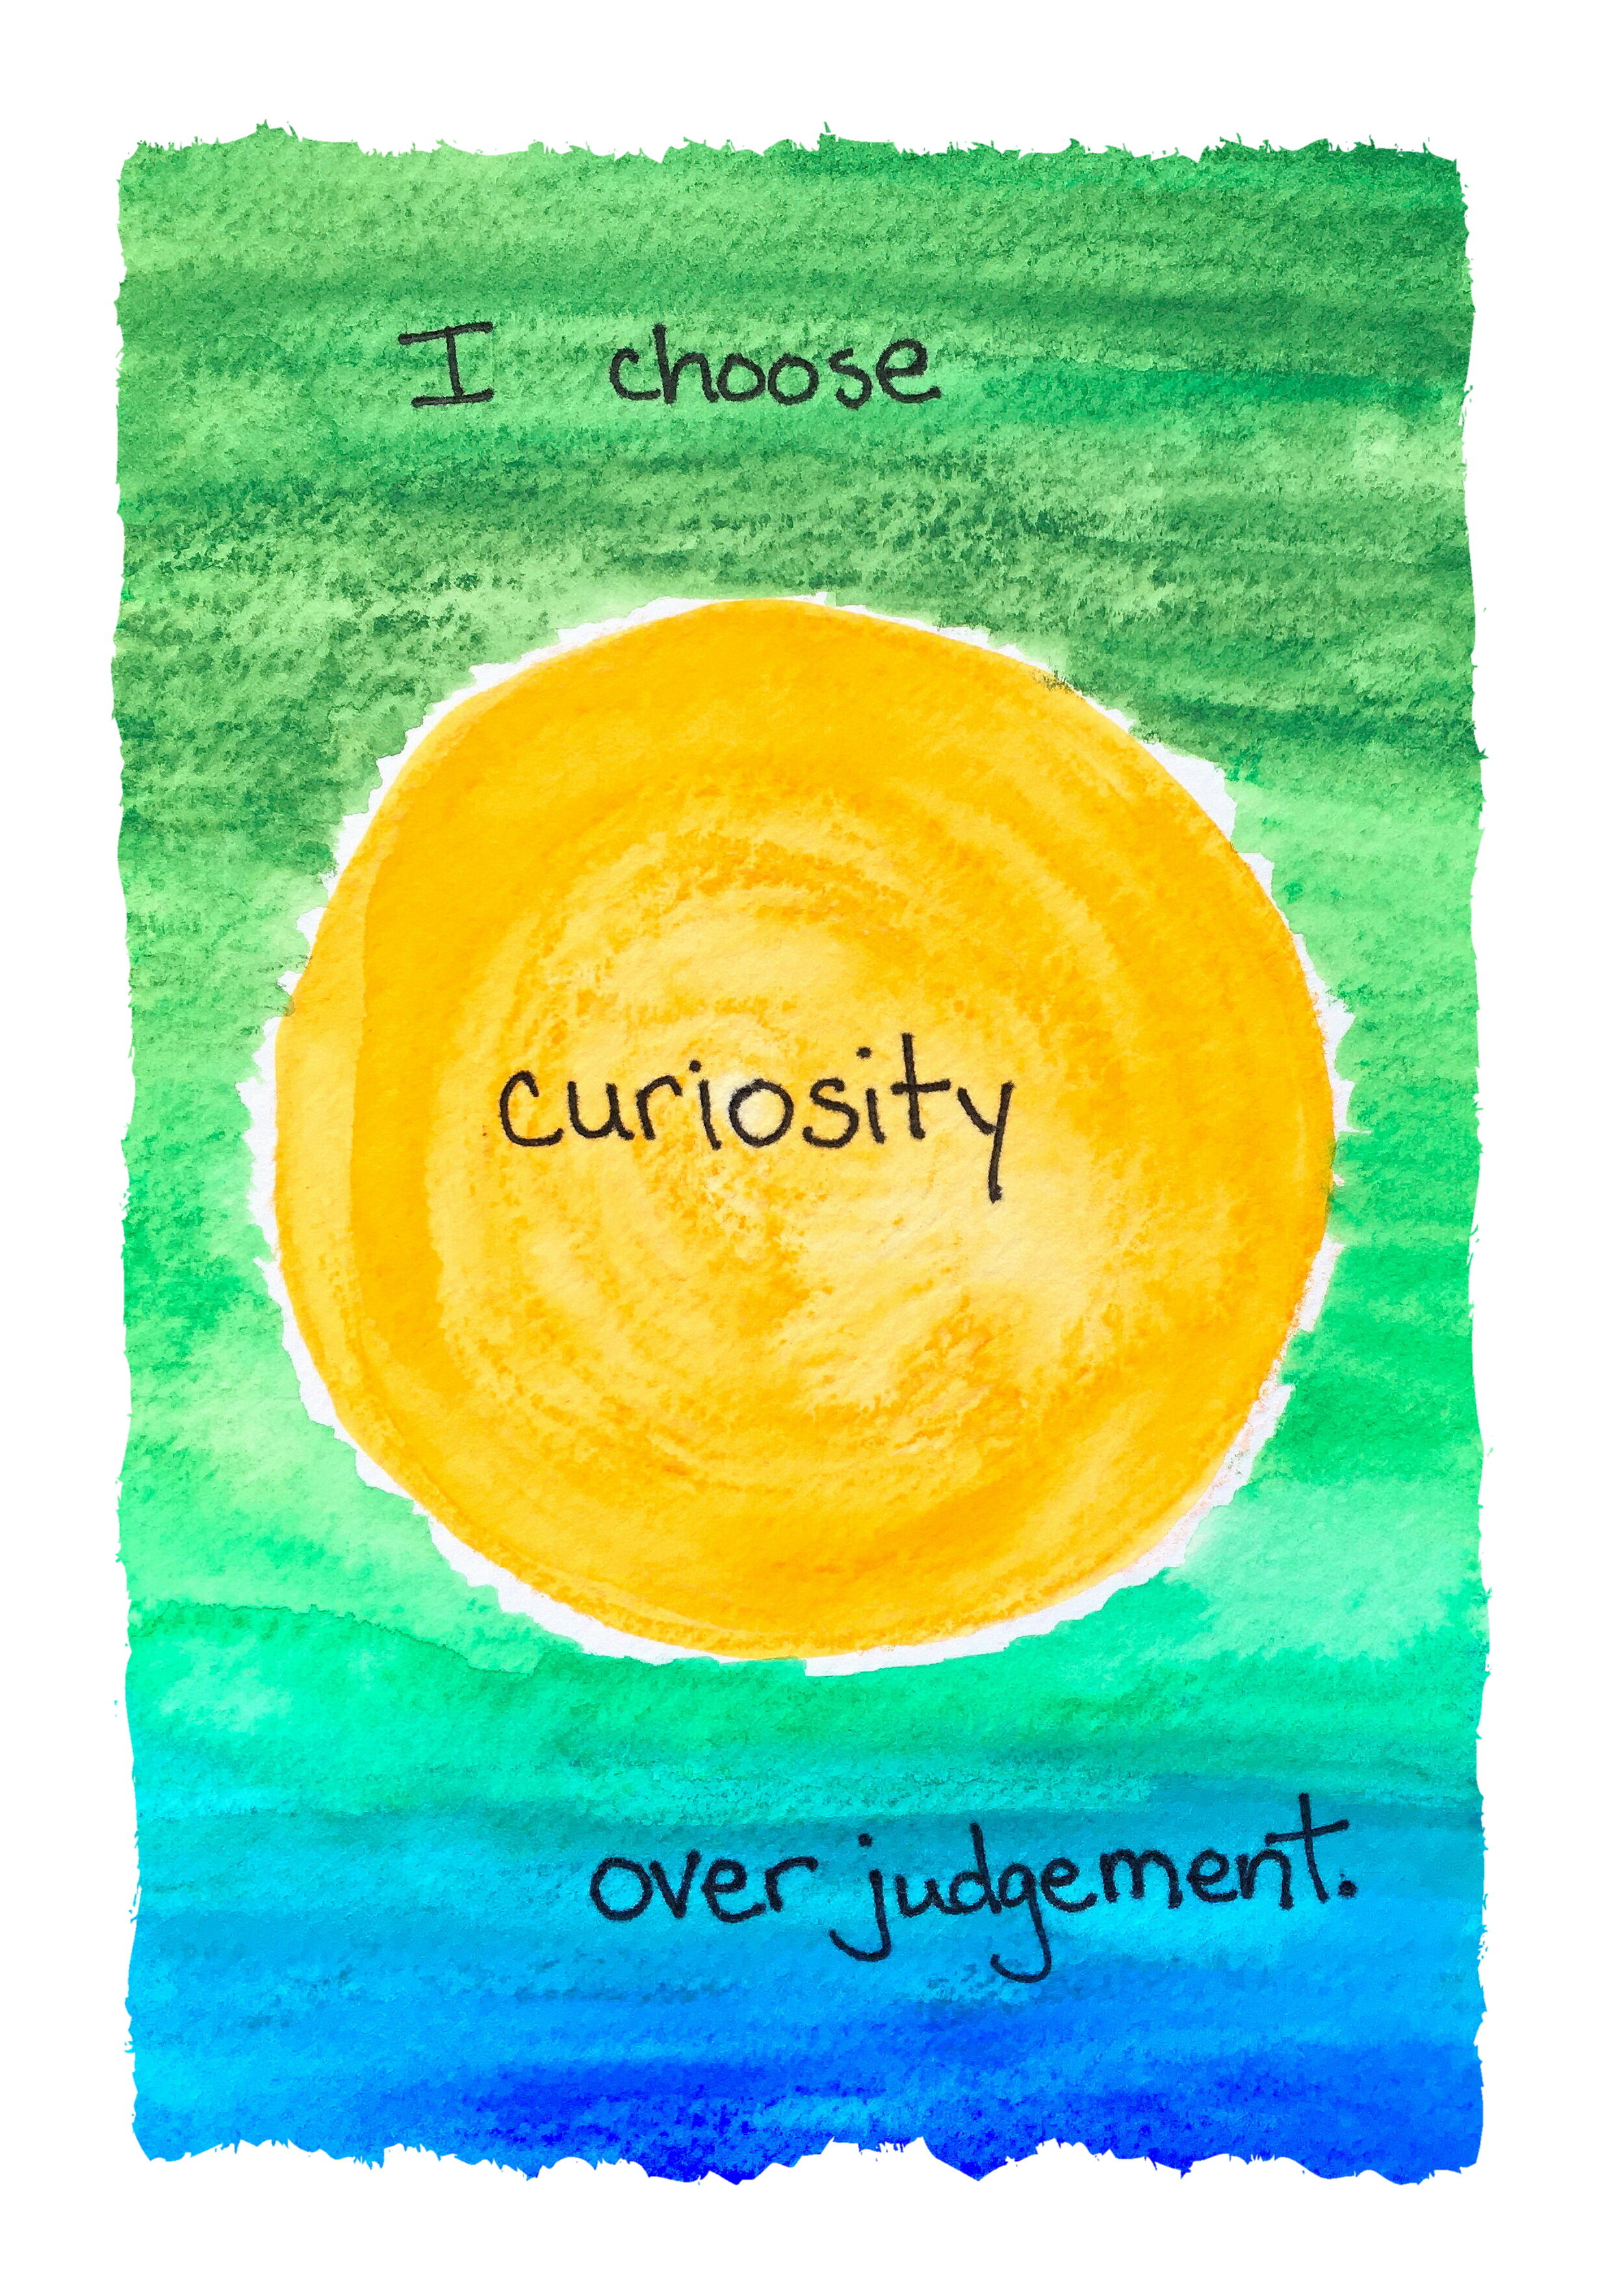 24 Curiosity over judgment rough.jpg